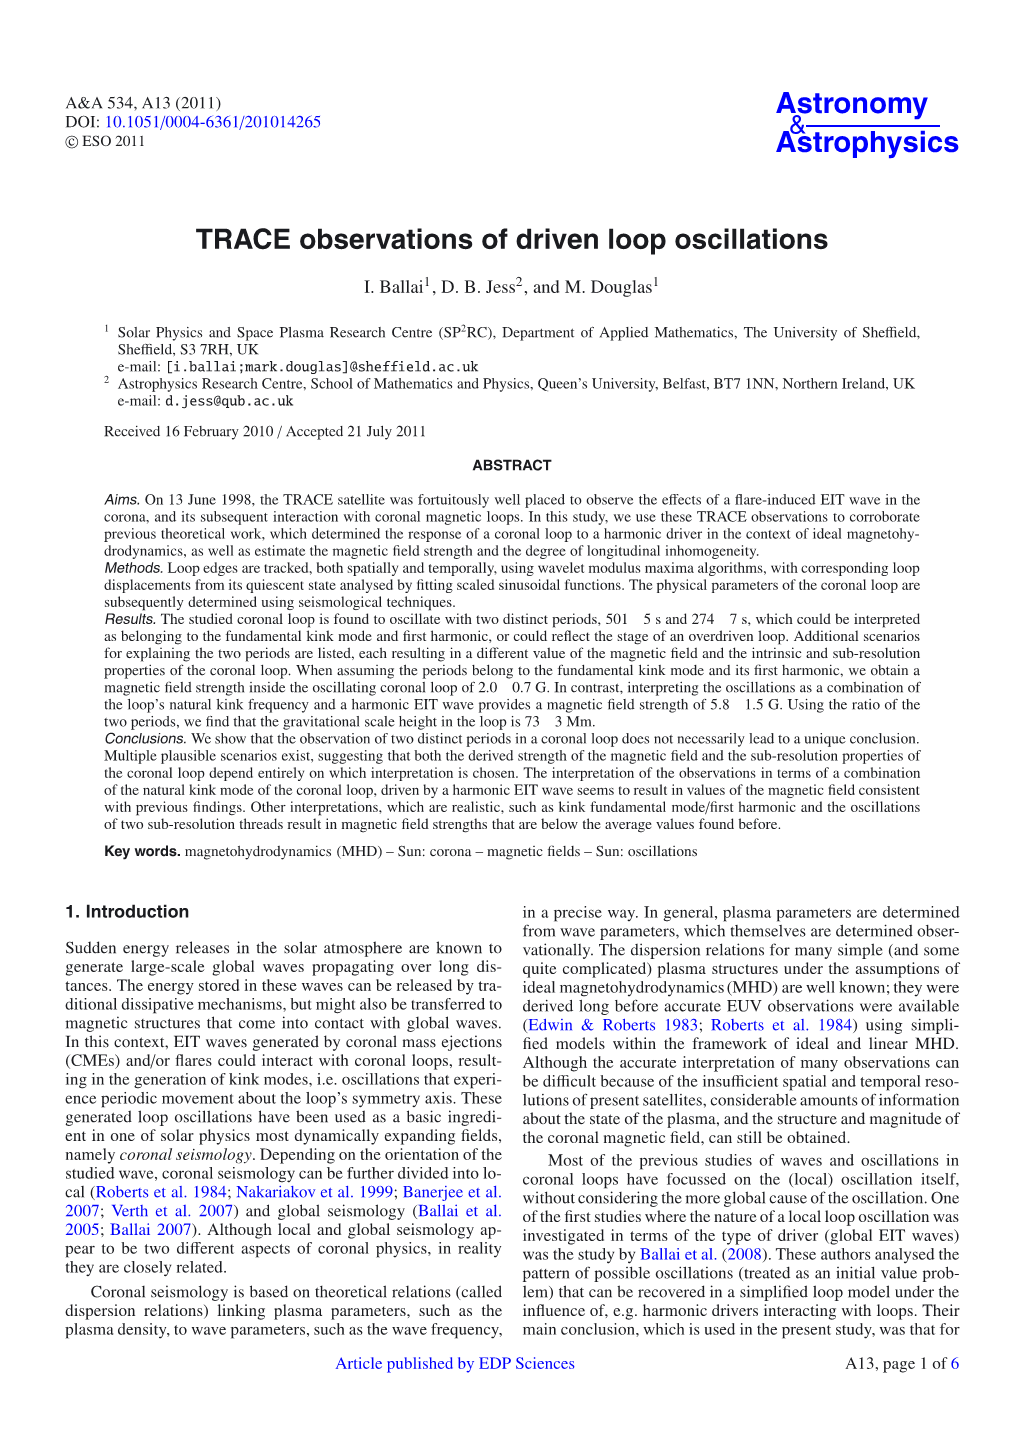 TRACE Observations of Driven Loop Oscillations